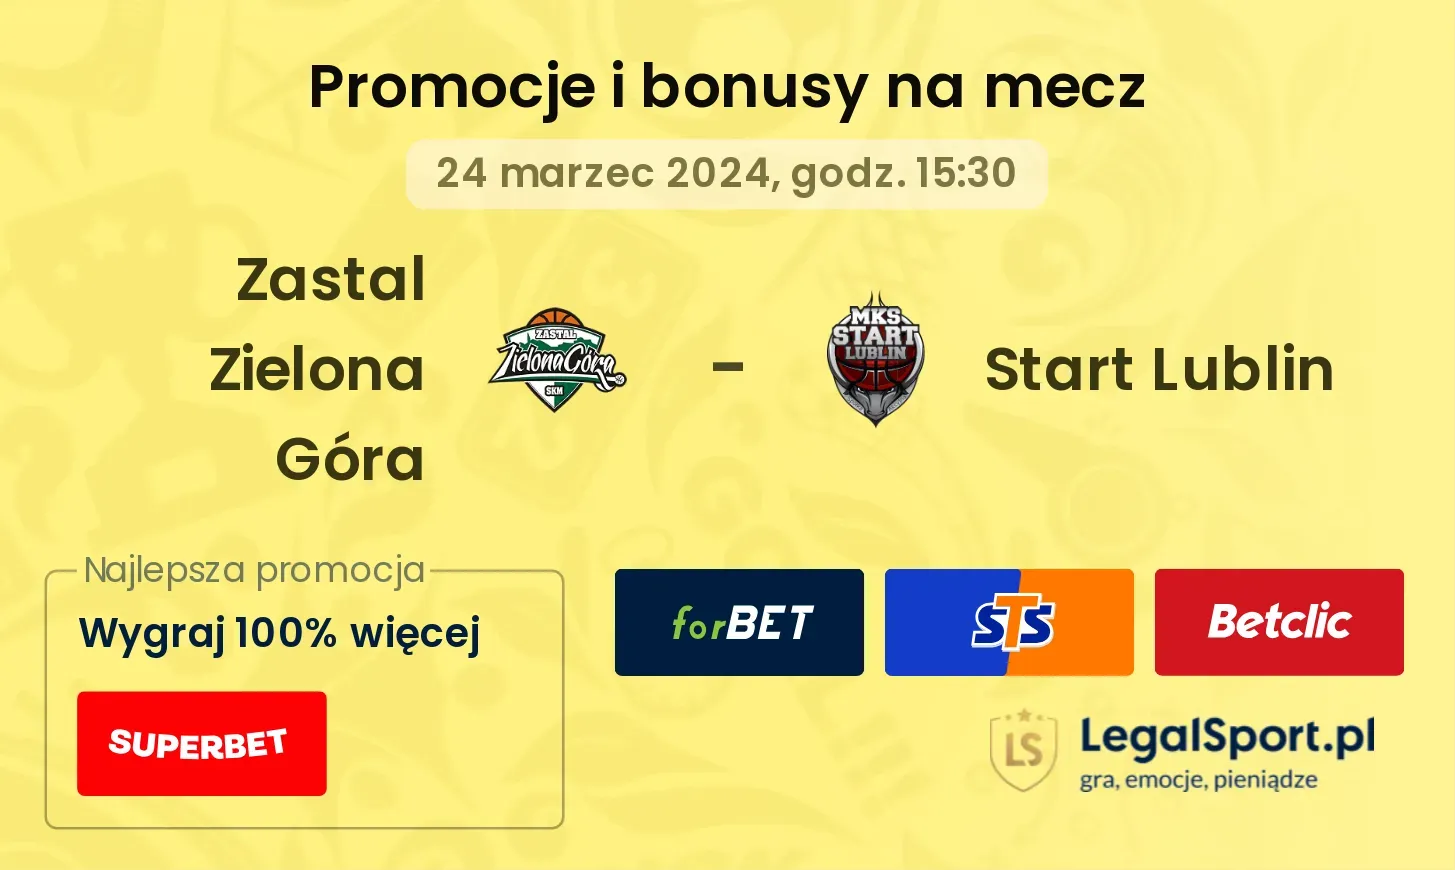 Zastal Zielona Góra - Start Lublin promocje bonusy na mecz